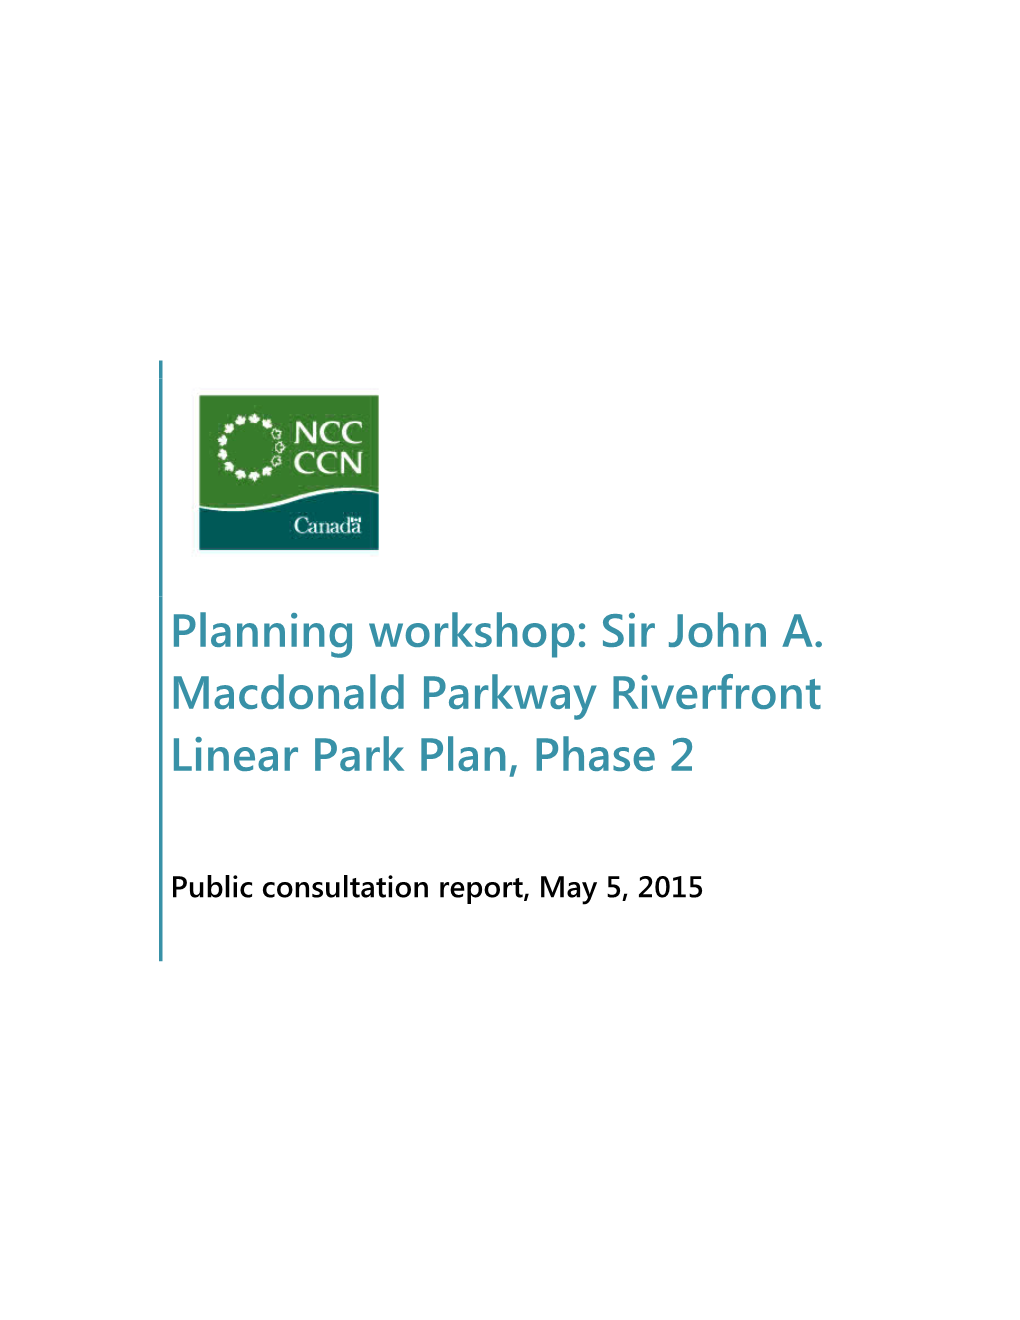 Sir John A. Macdonald Parkway Riverfront Linear Park Plan, Phase 2